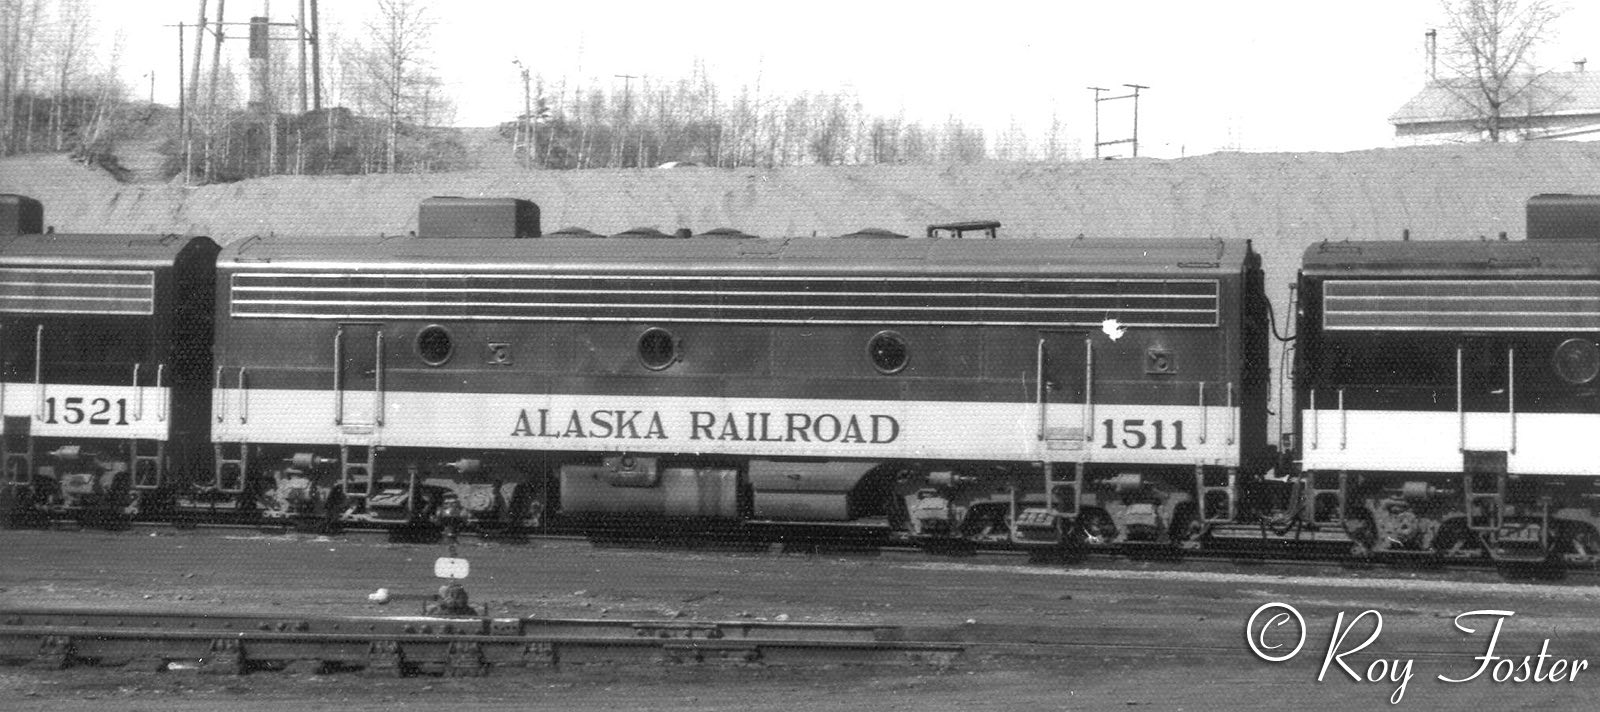 ARR 1511, Anchorage, 4-29-74